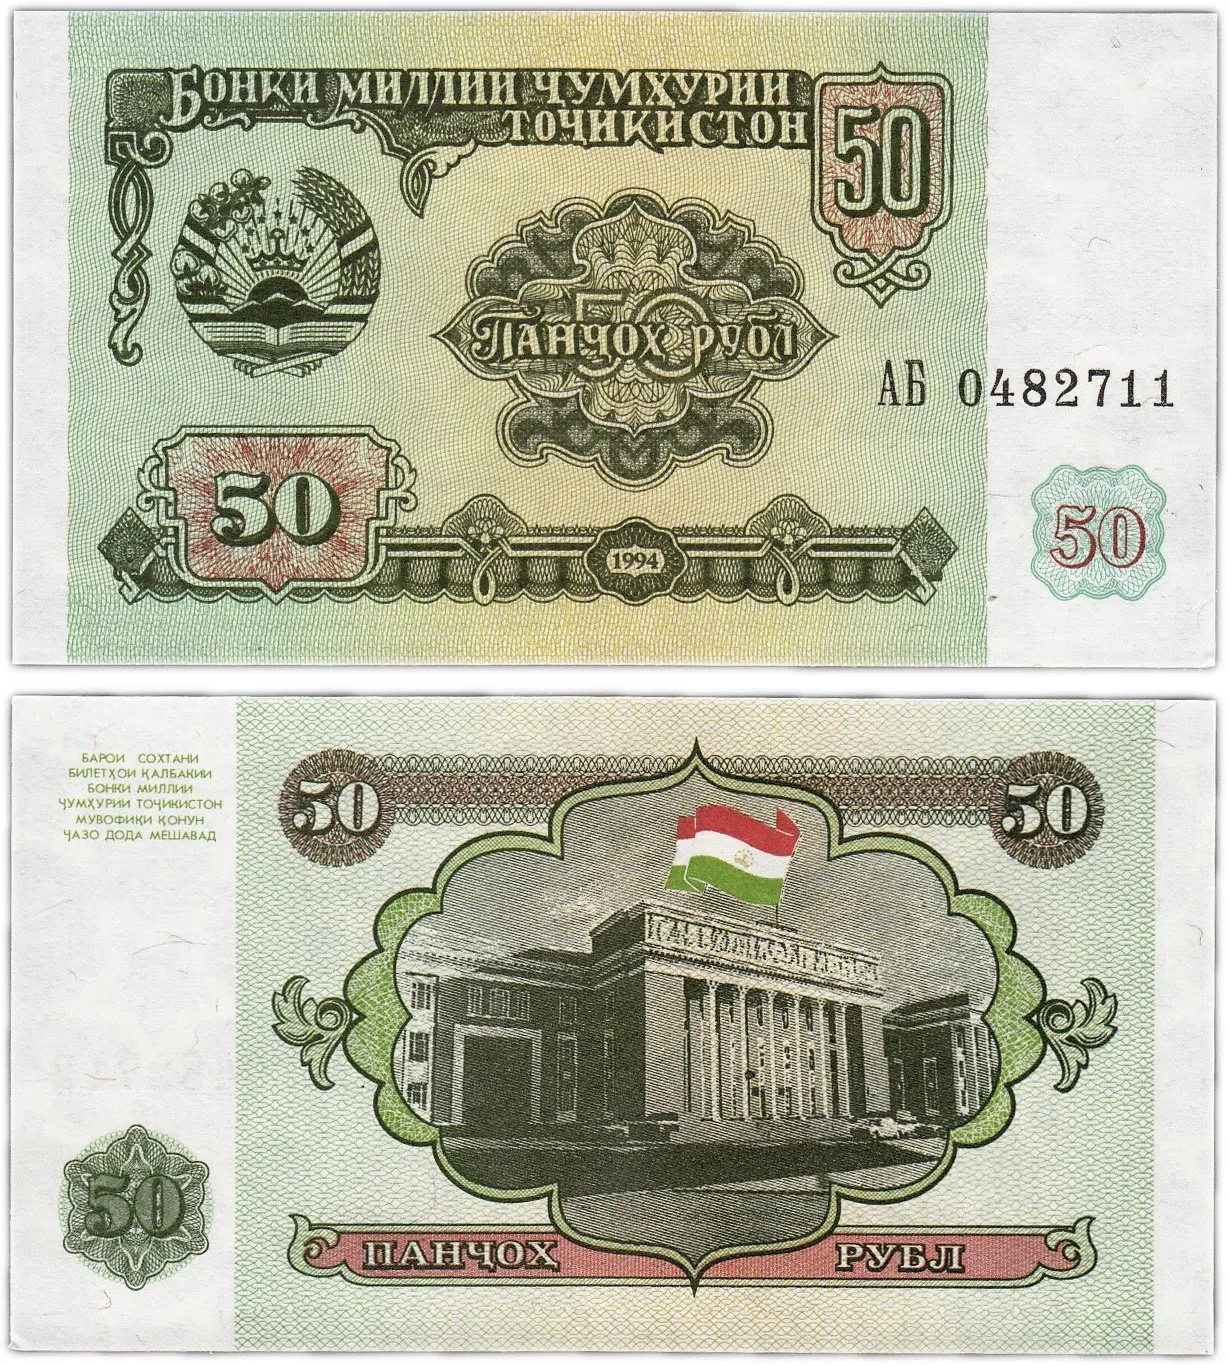 500 рублей в таджикистане. Банкноты Таджикистана. Купюры Таджикистана.